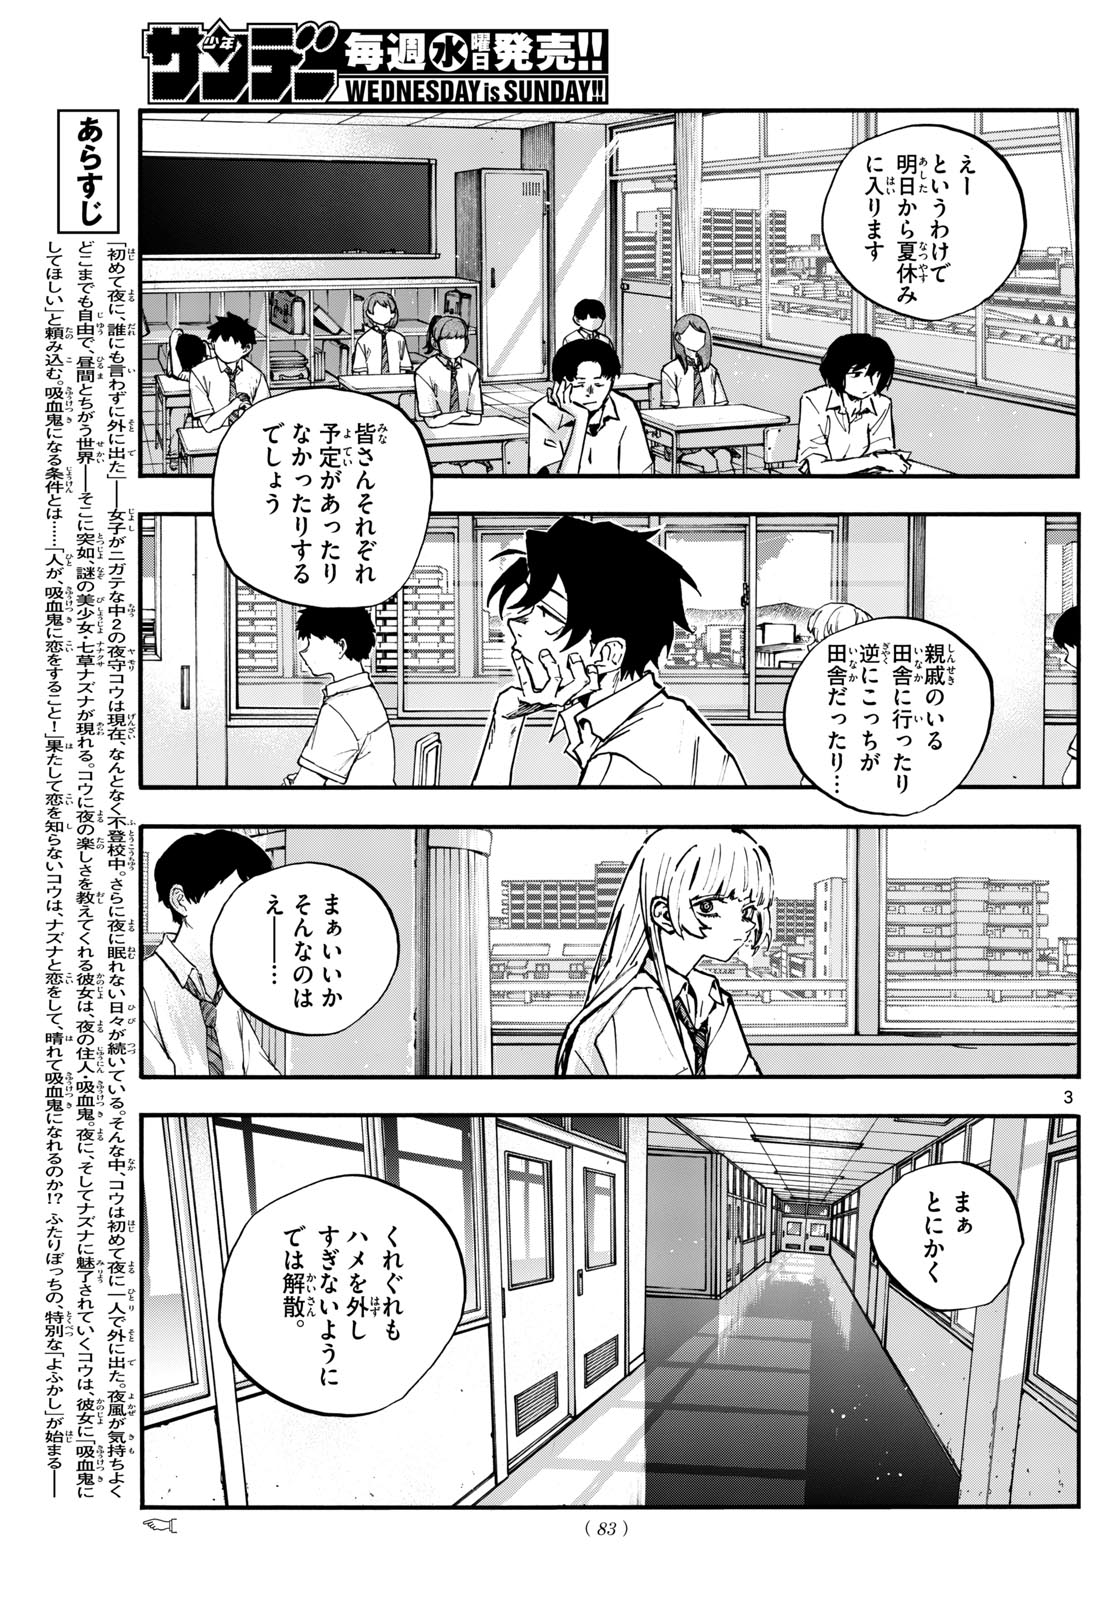 Yofukashi no Uta - Chapter 195 - Page 3